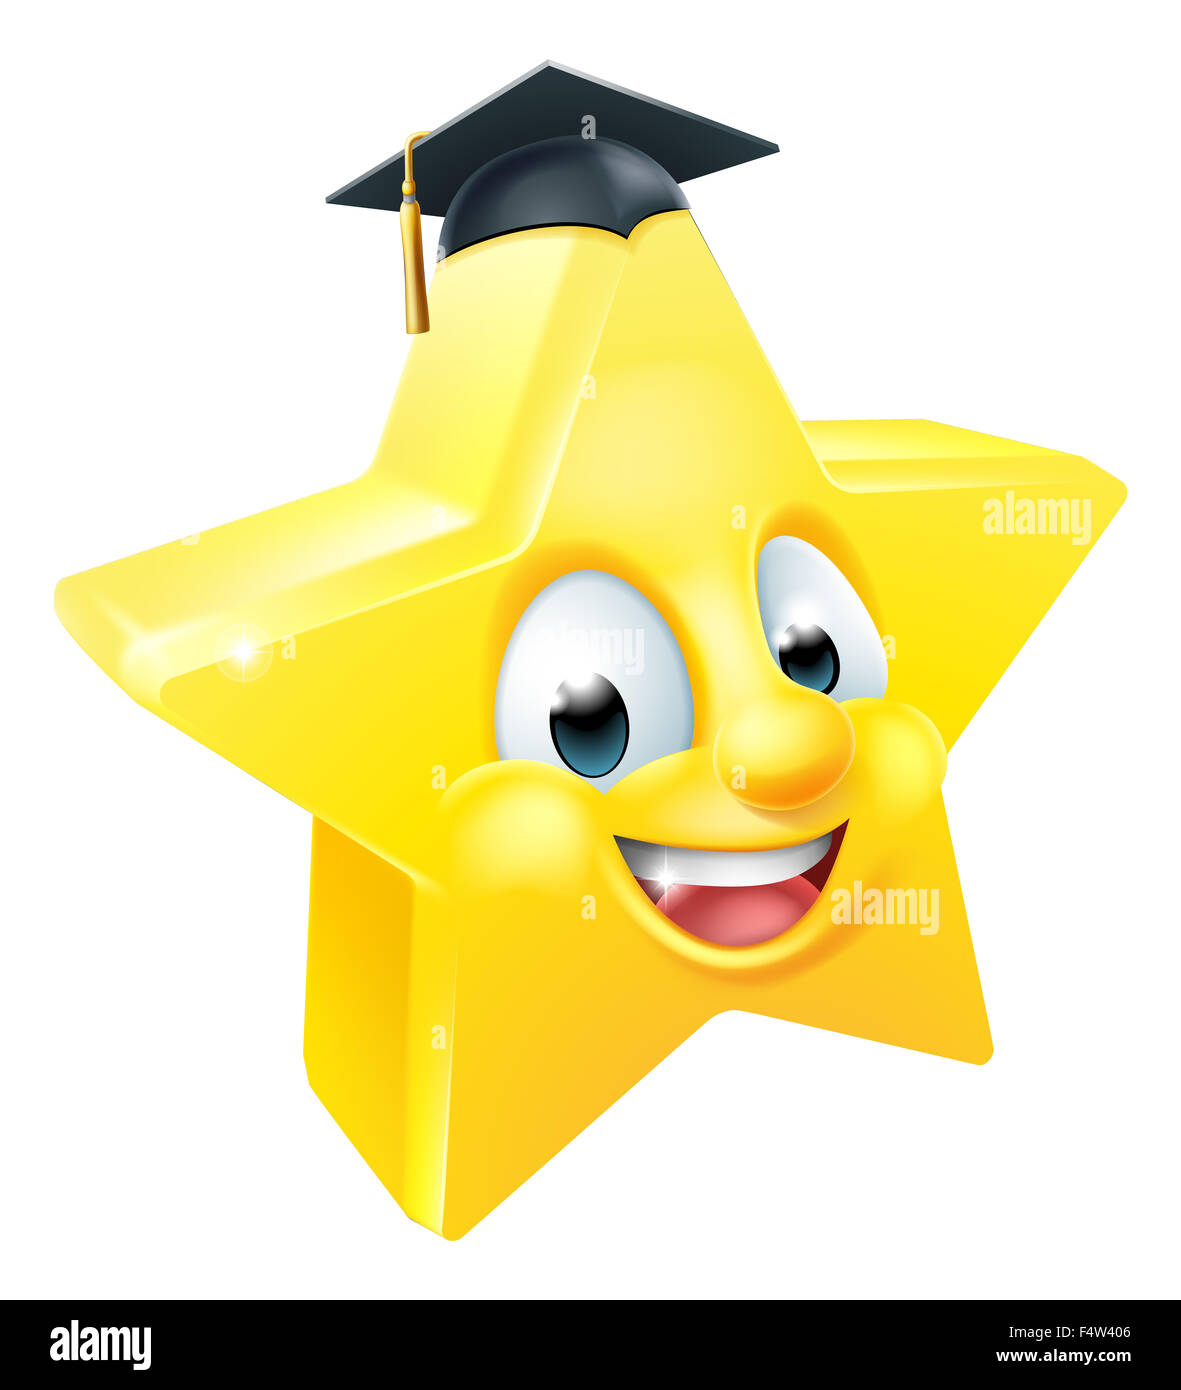 Cartoon star graduate emoji emoticon mascot character wearing a mortar board graduation hat Stock Photo